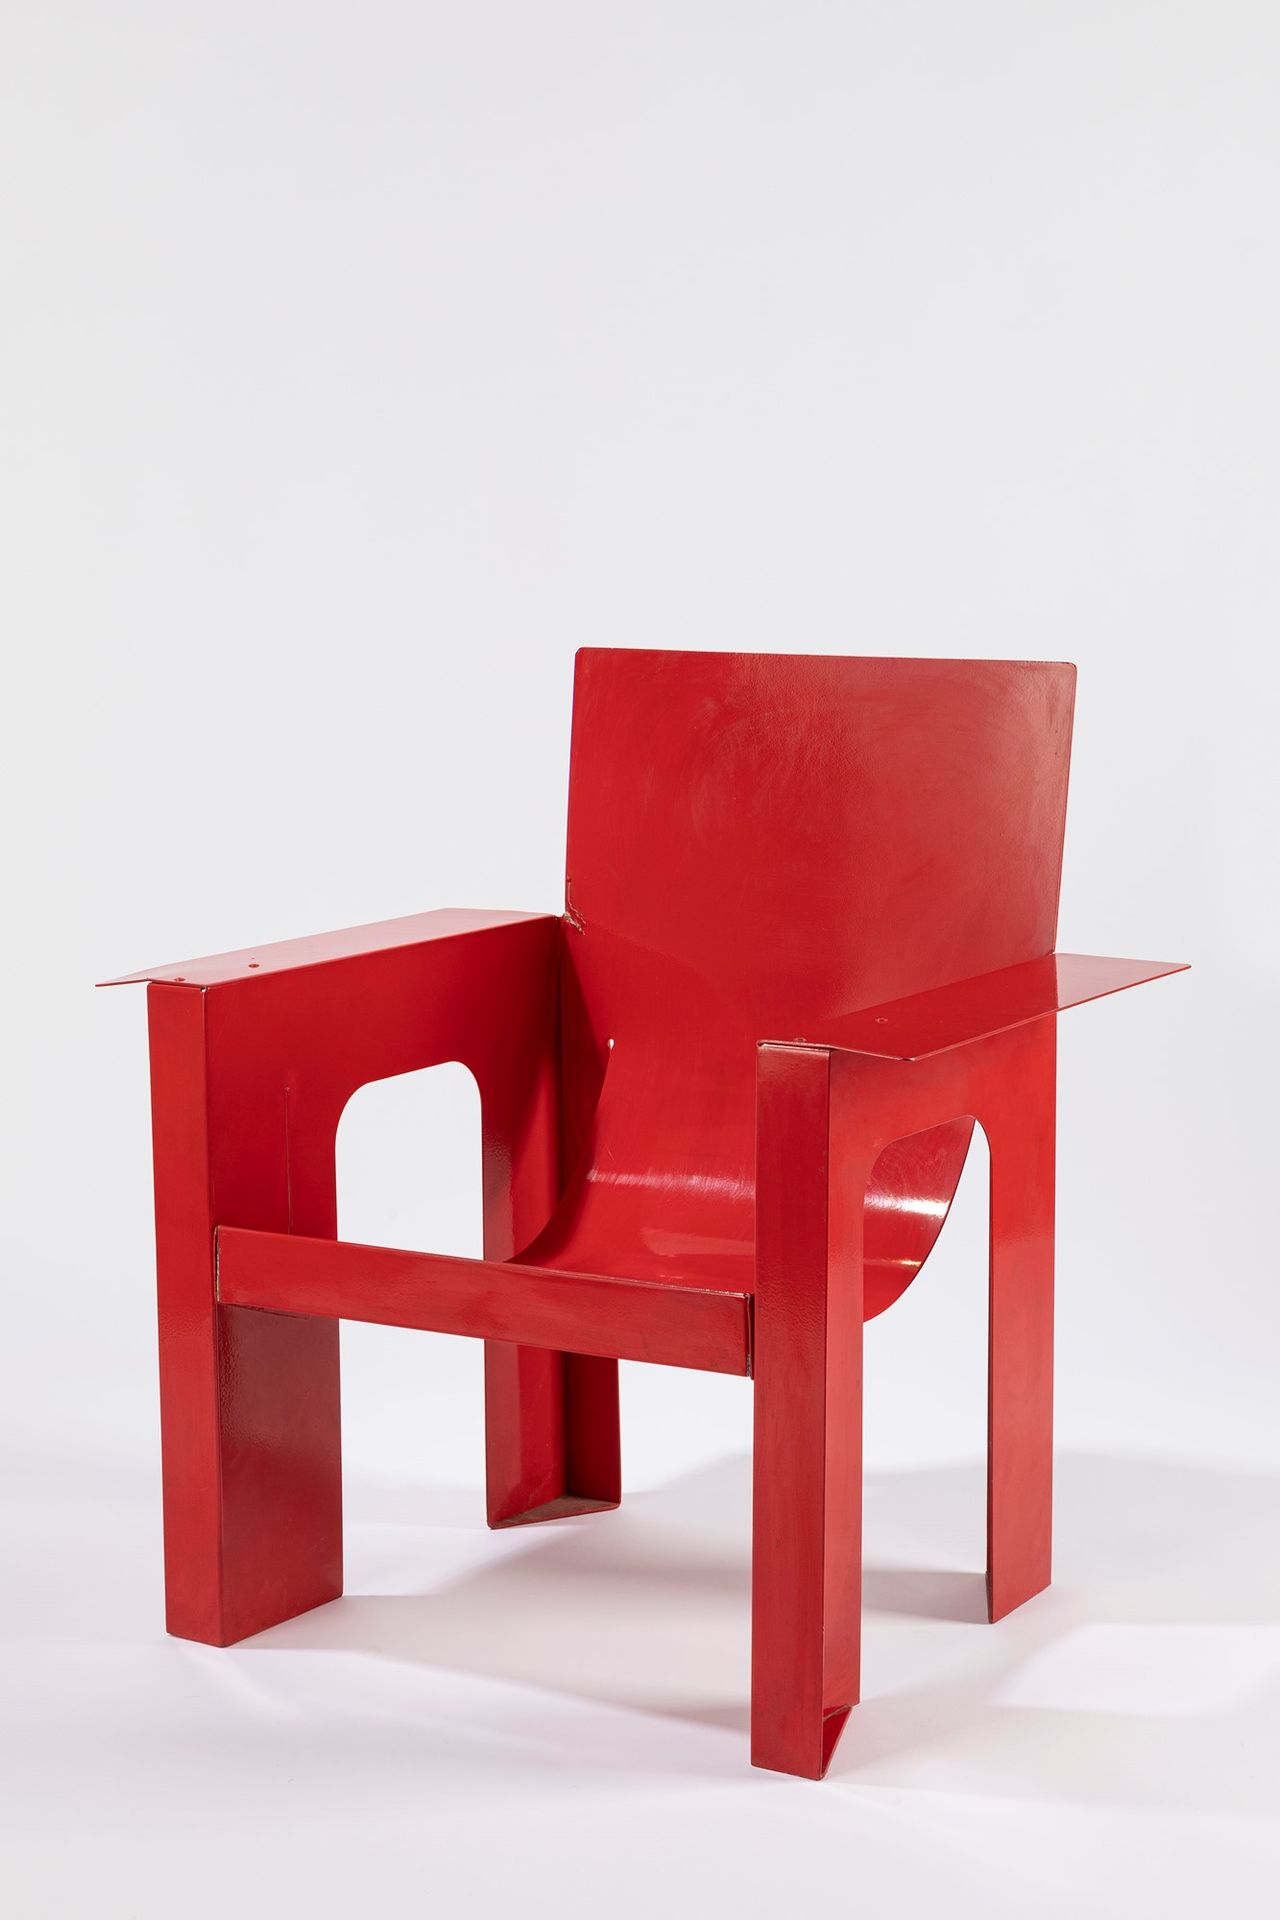 Giandomenico Belotti Rietveld, 1984

h 78 x 72.5 x 48
red varnished metal chair.&hellip;